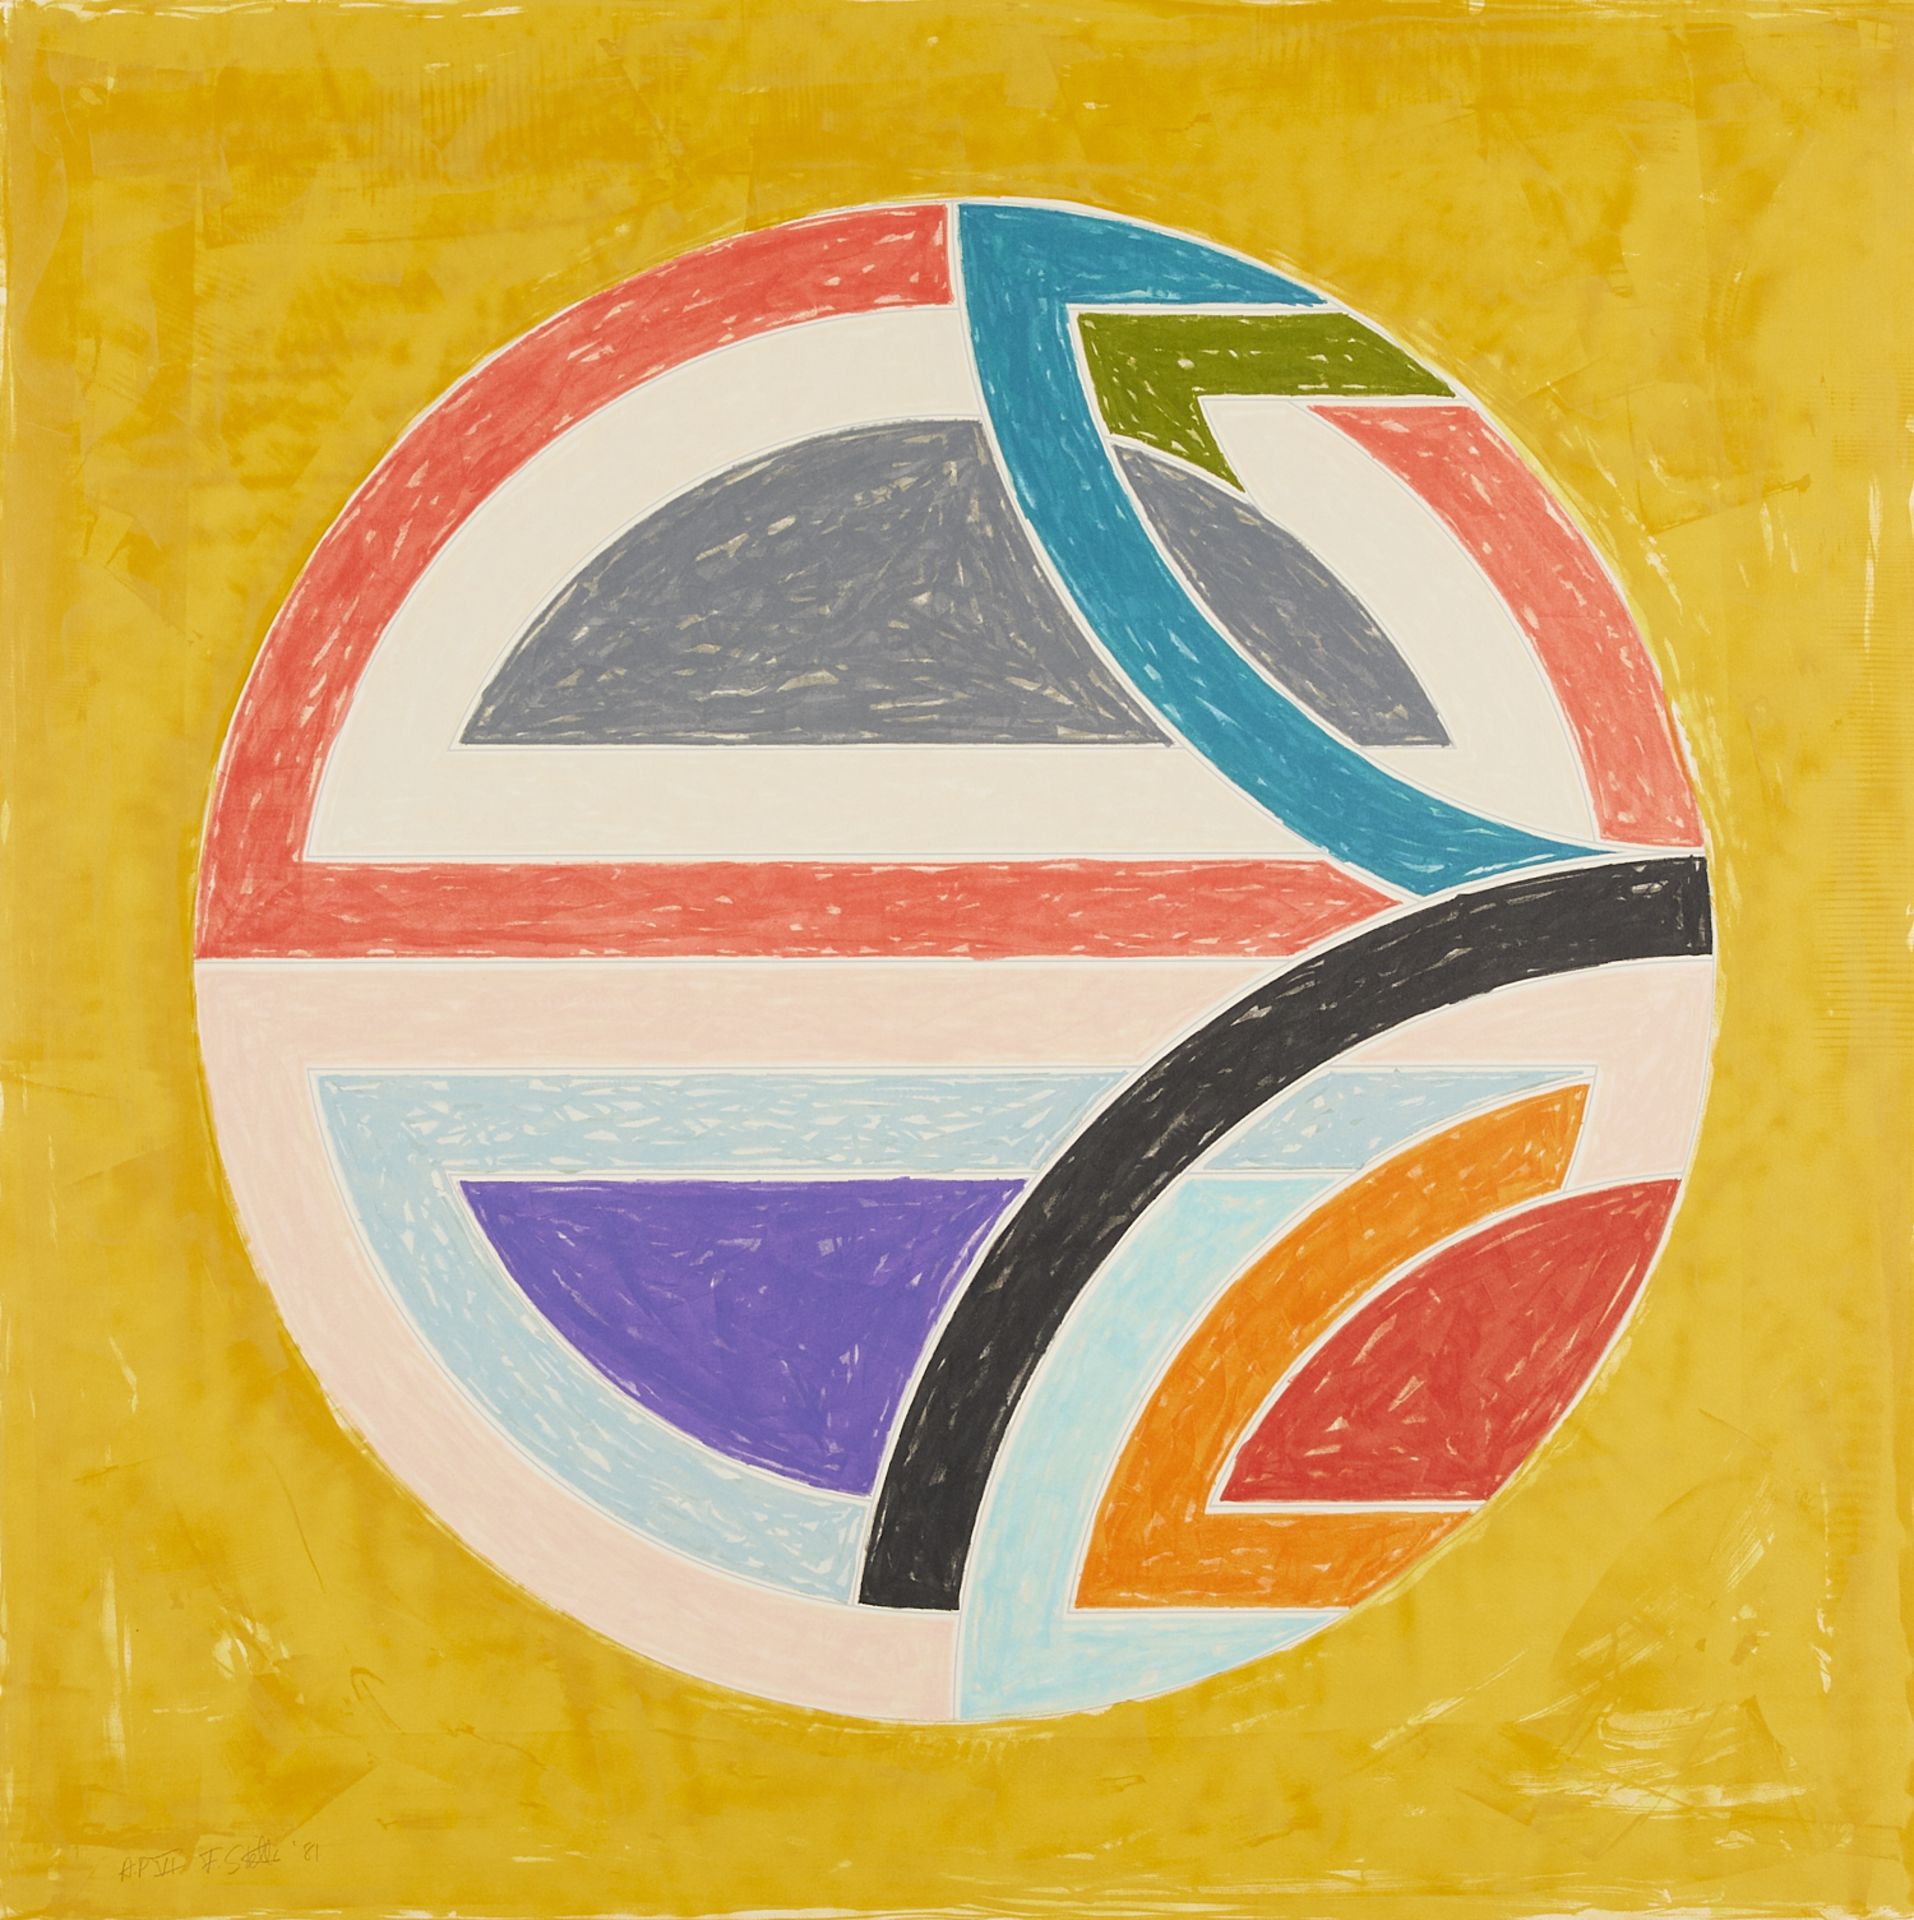 Frank Stella "Sinjerli Variation" Lithograph 1981